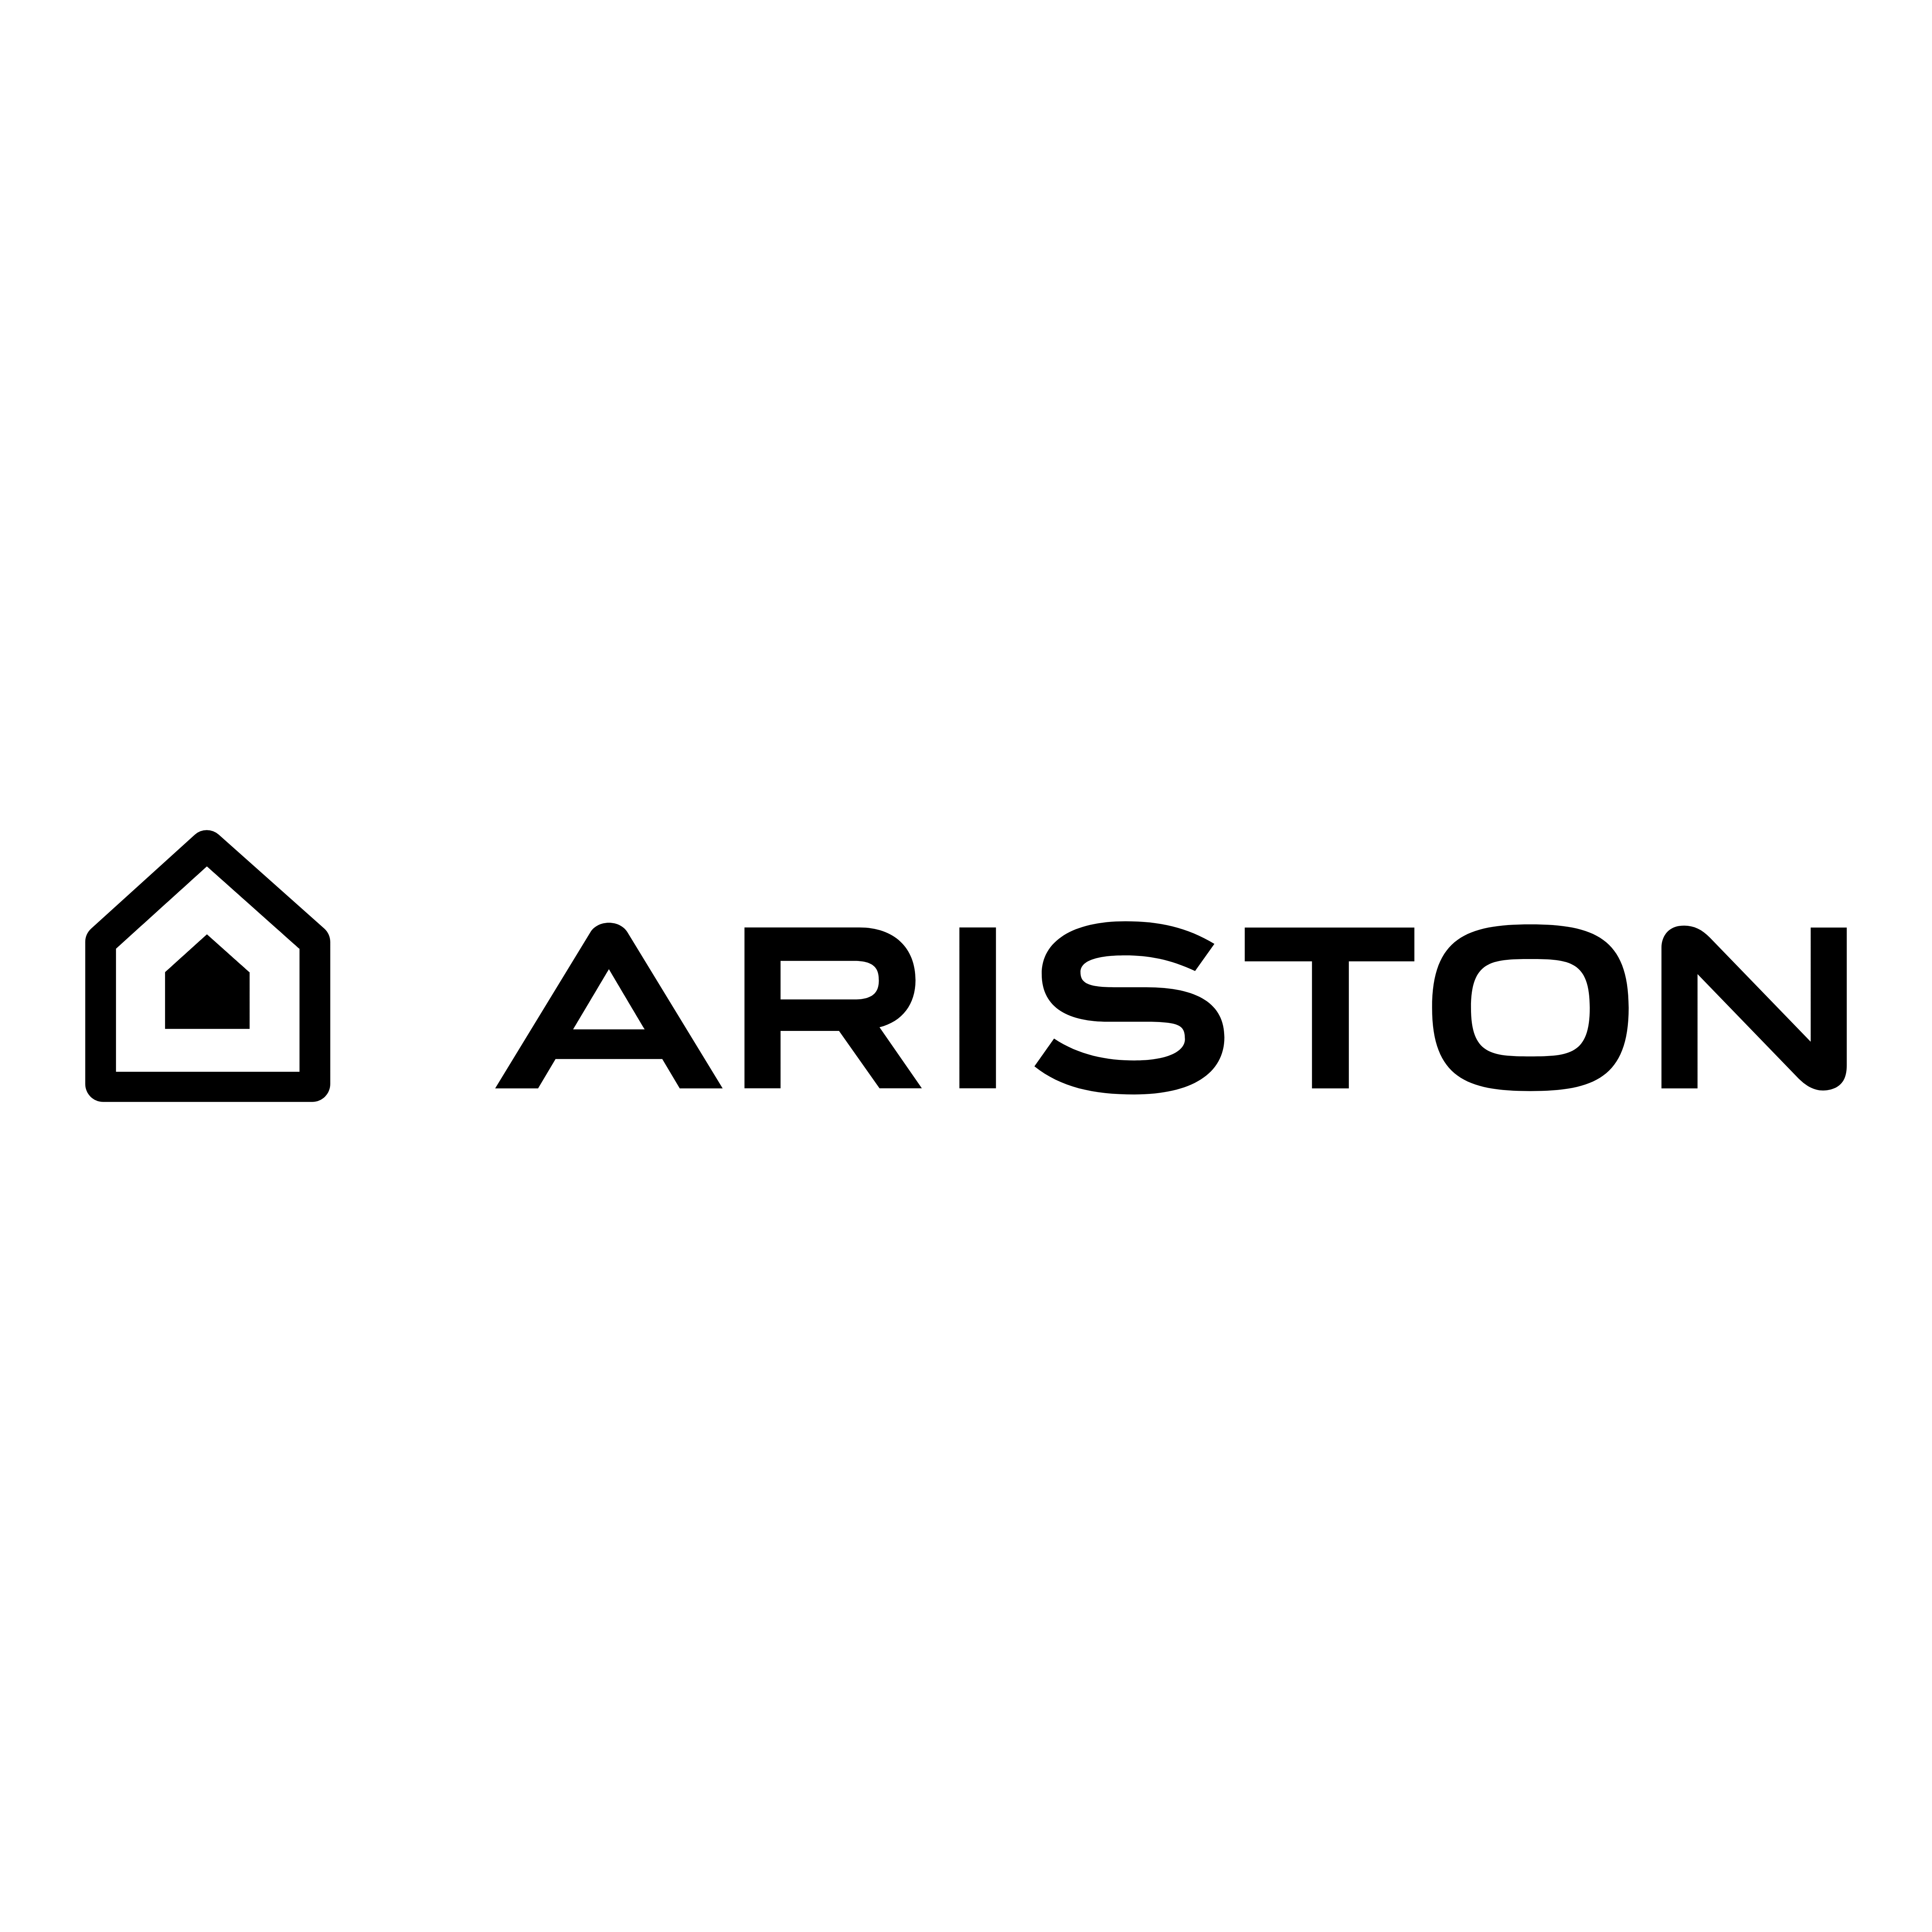 Ariston фирма. Хотпоинт Аристон лого. Ariston котел лого. Ariston Thermo Group logo. Логотип Ariston в векторе.